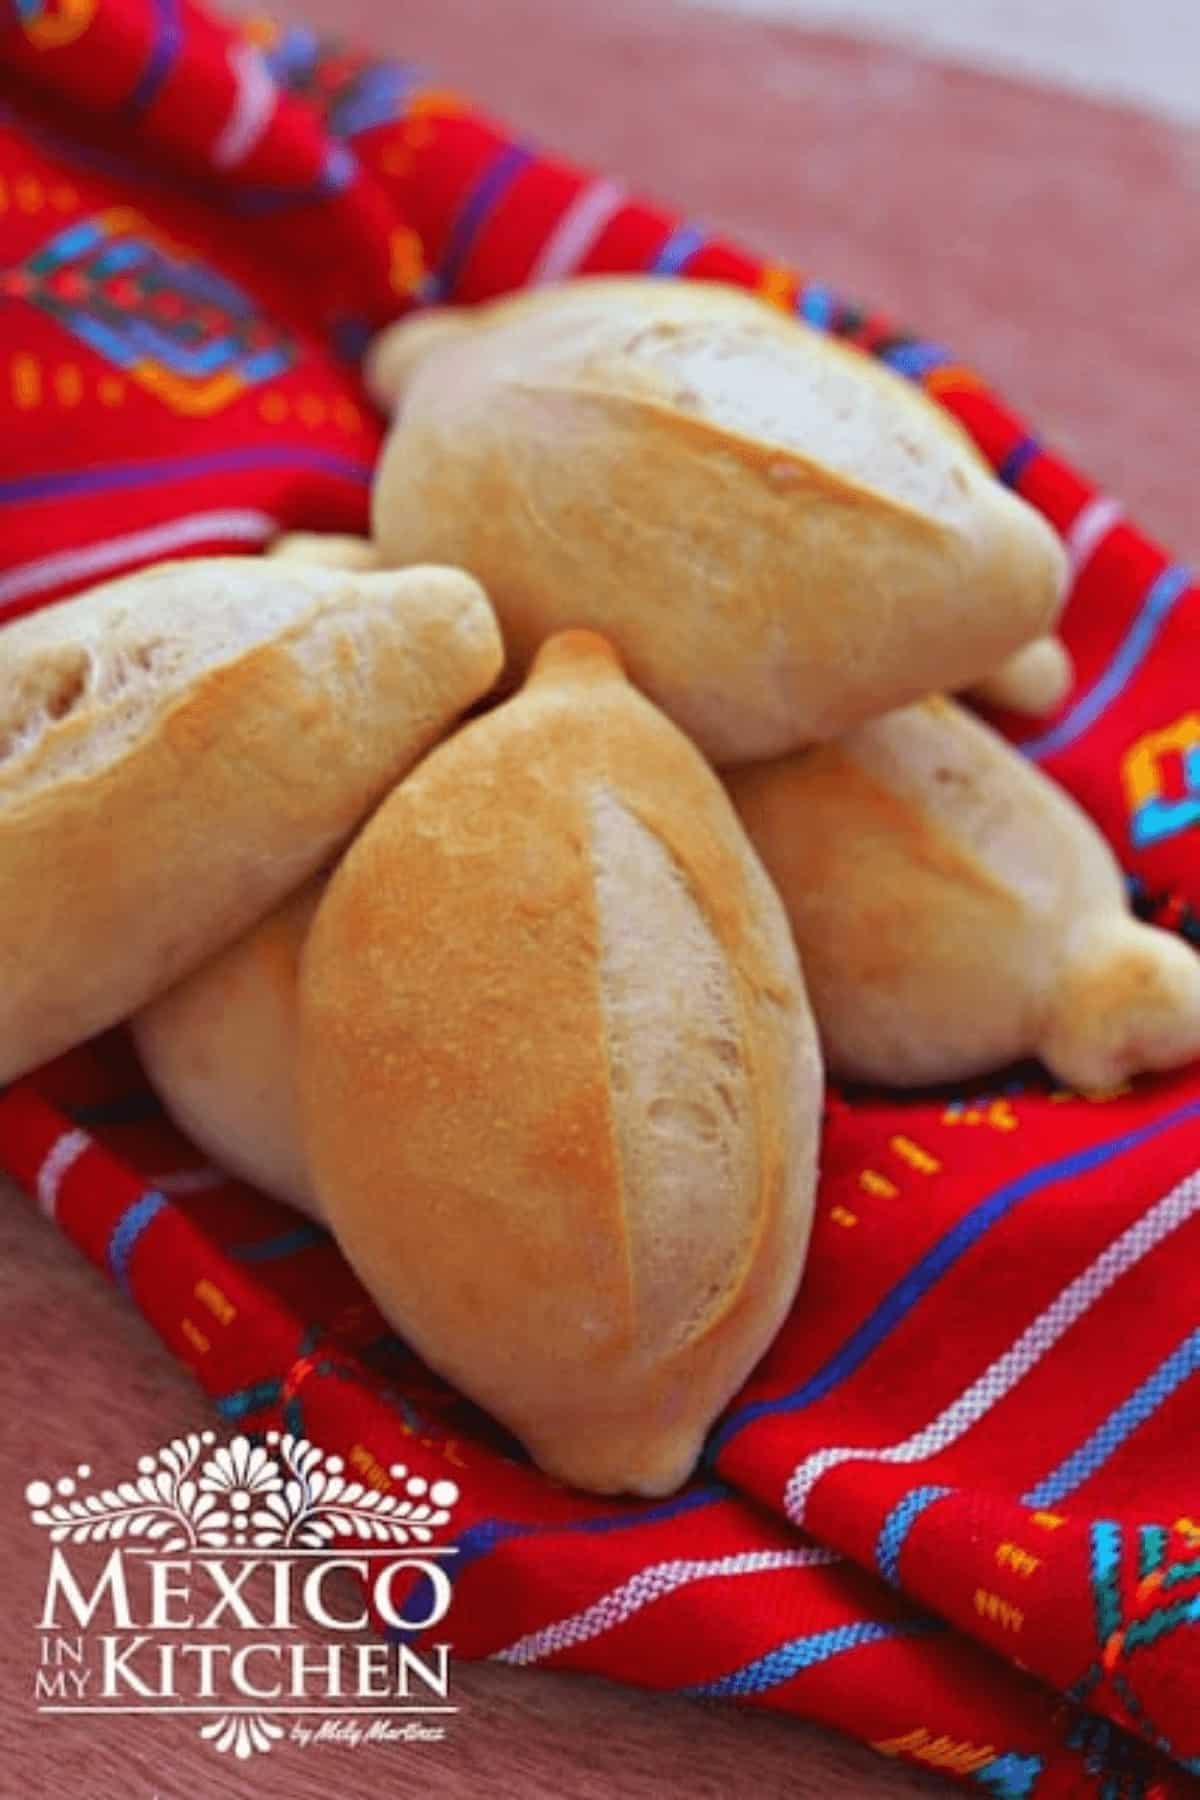 Mexican Bolillos (Crusty Rolls) in a napkin